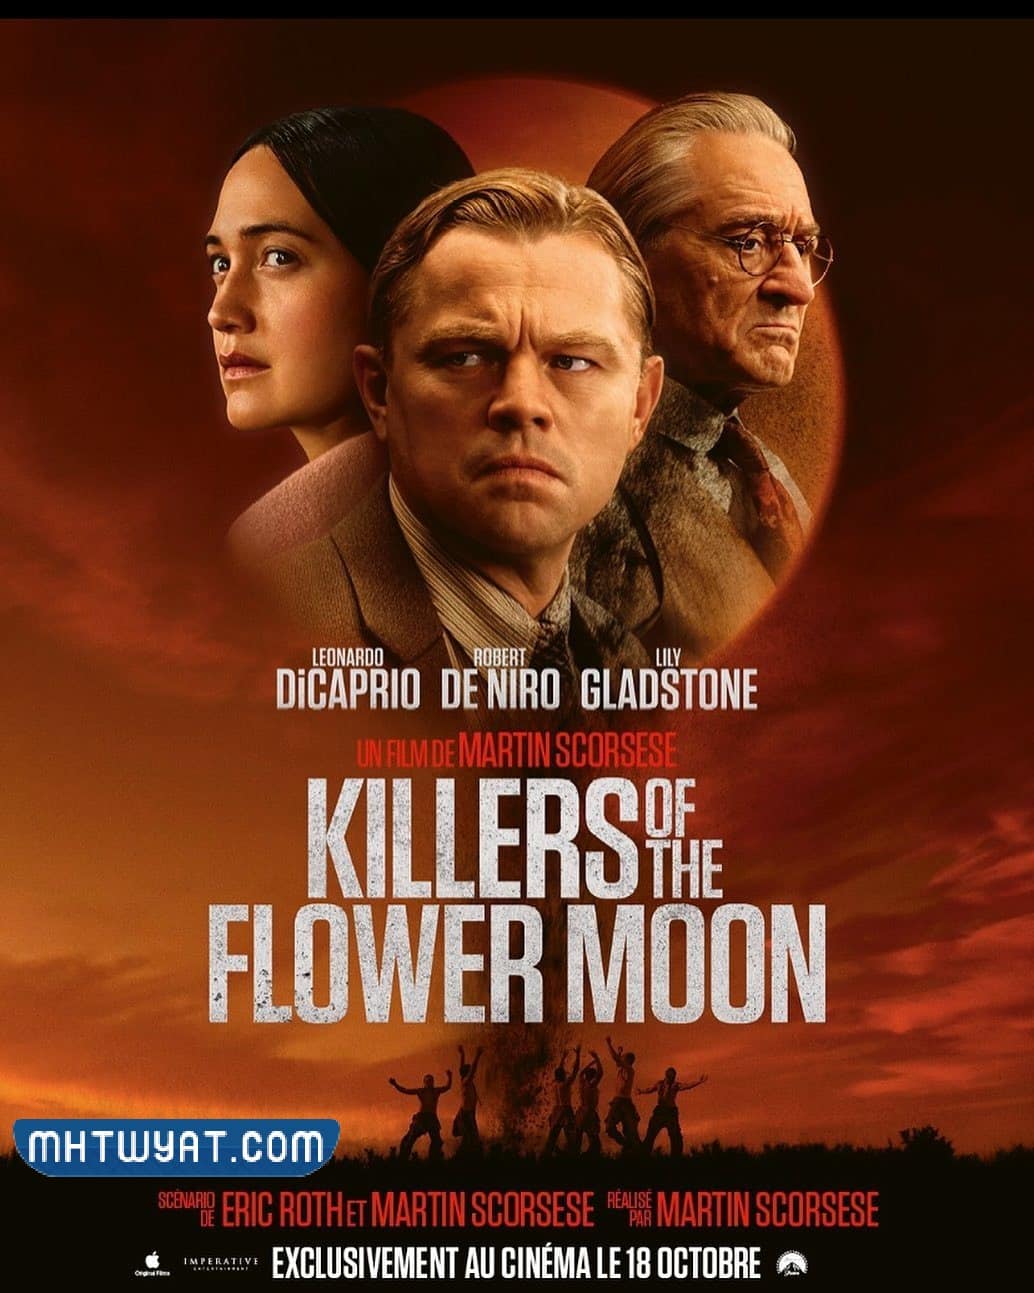 فيلم ليوناردو دي كابريو killers of the flower moon الجديد